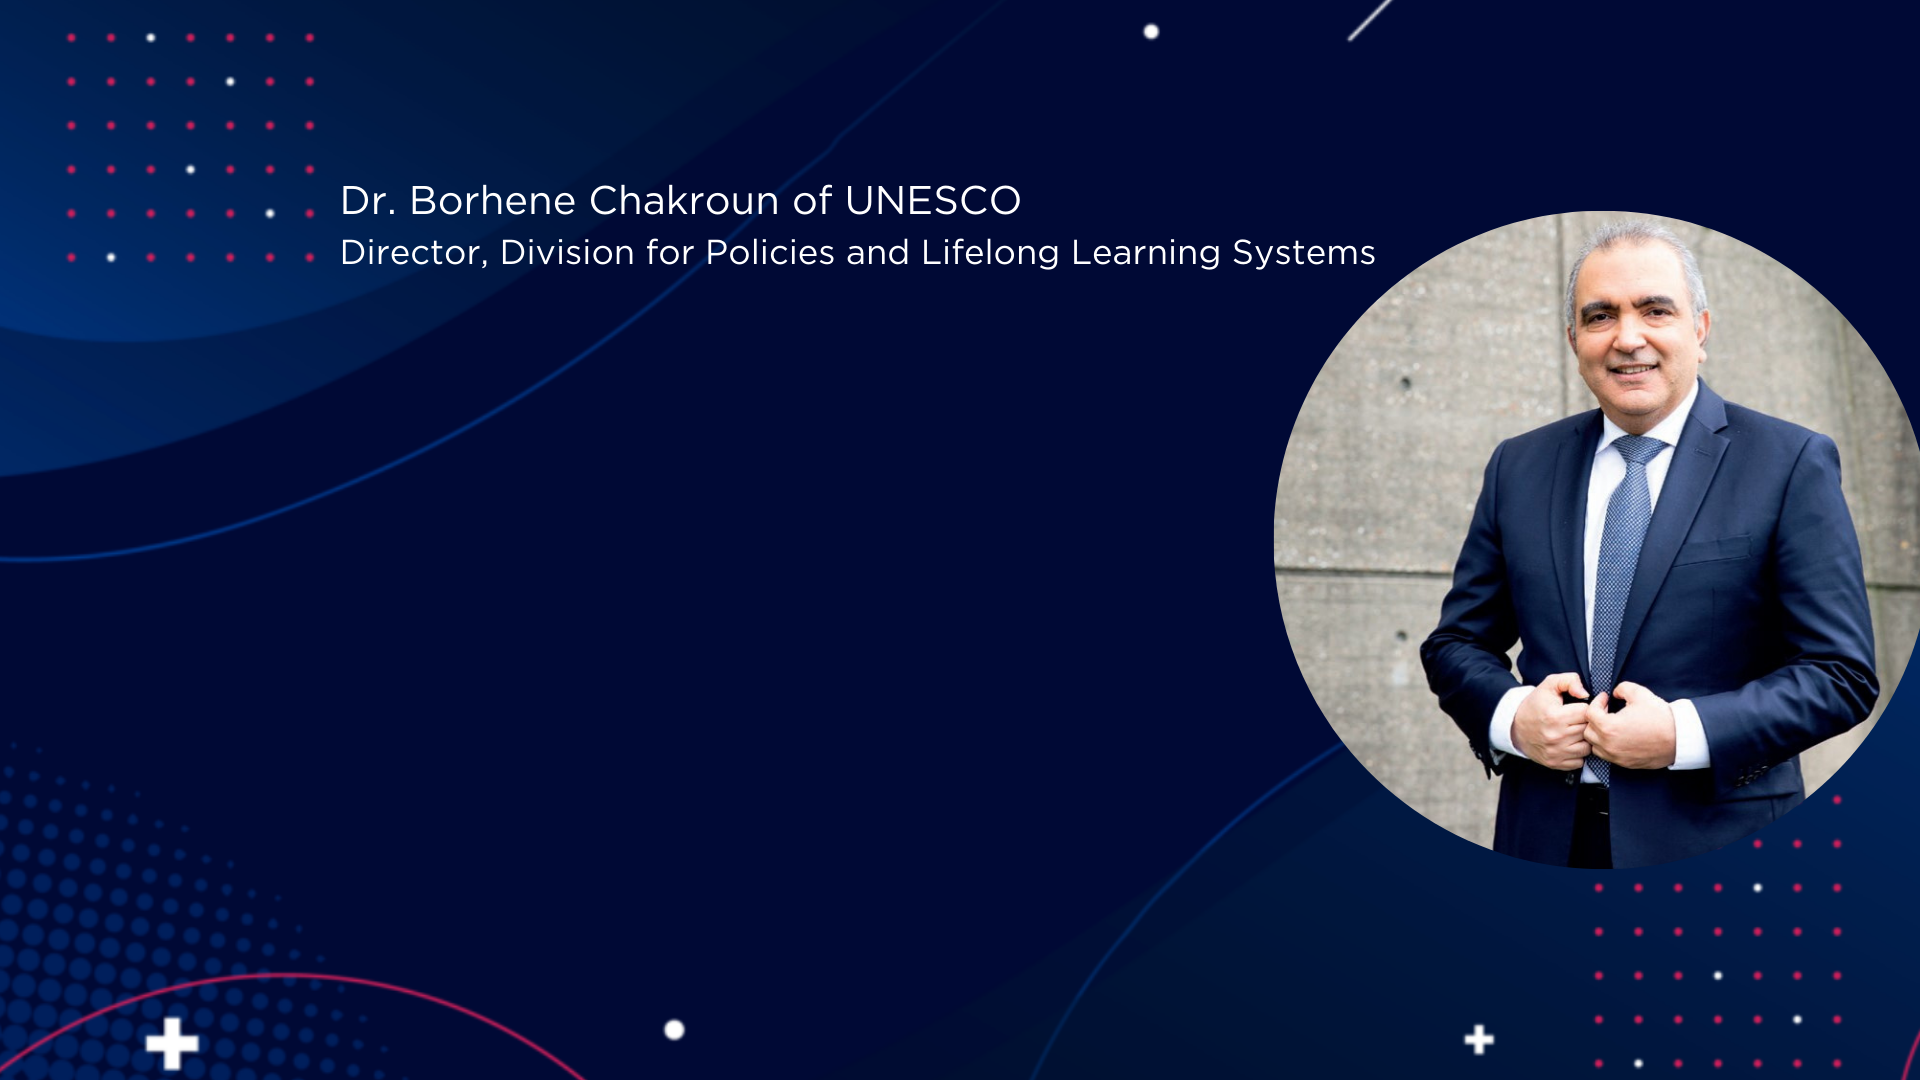 Dr. Borhene Chakroun of UNESCO addresses the Global Education Summit